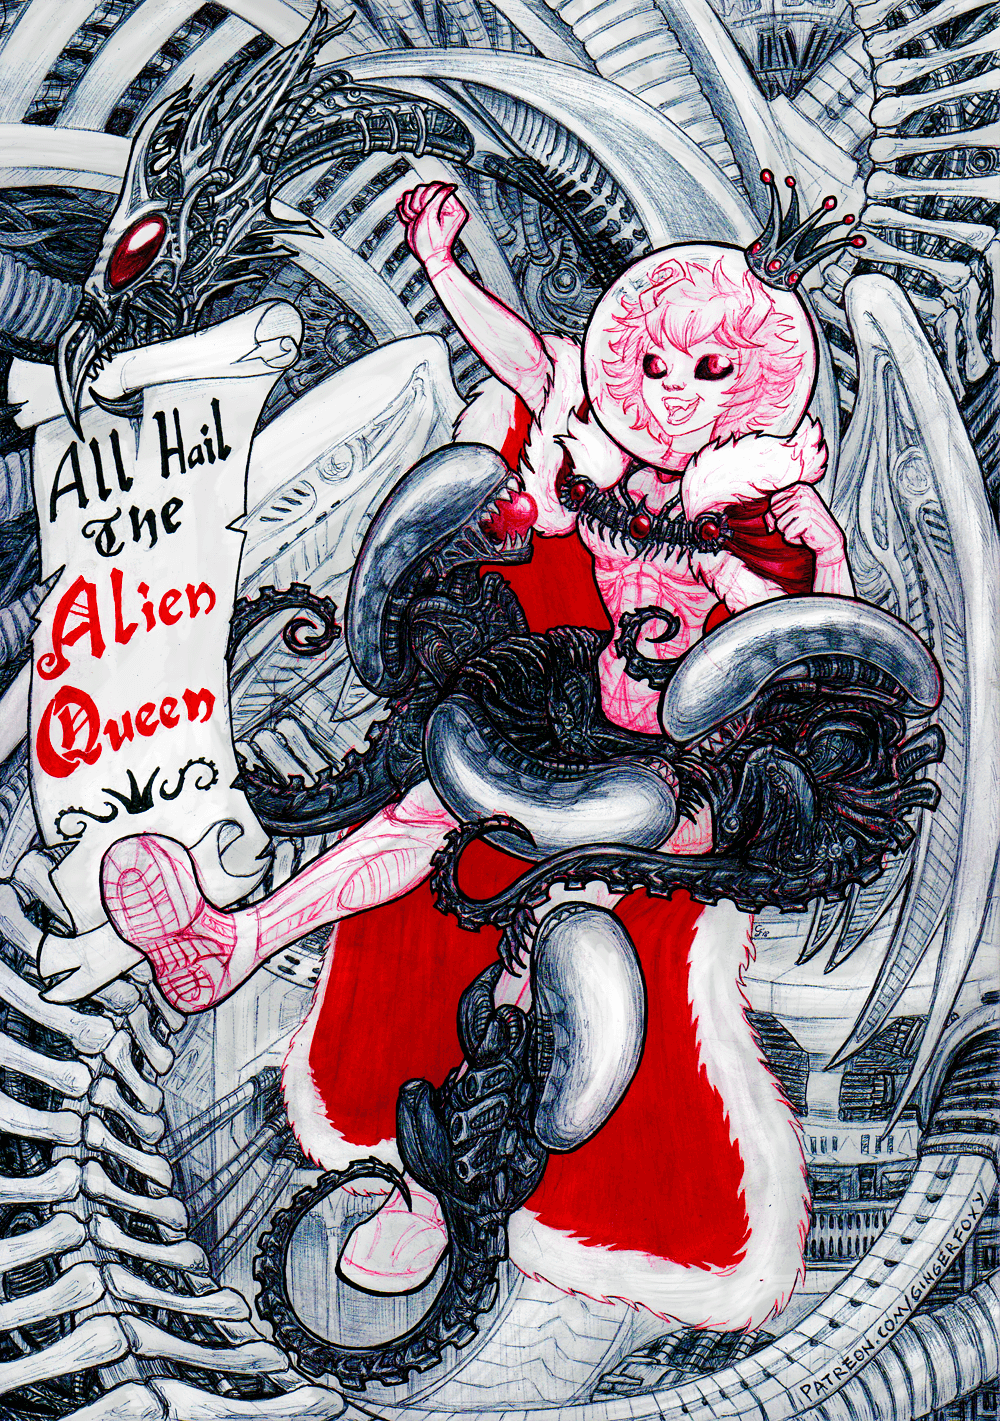 All Hail The Alien Queen